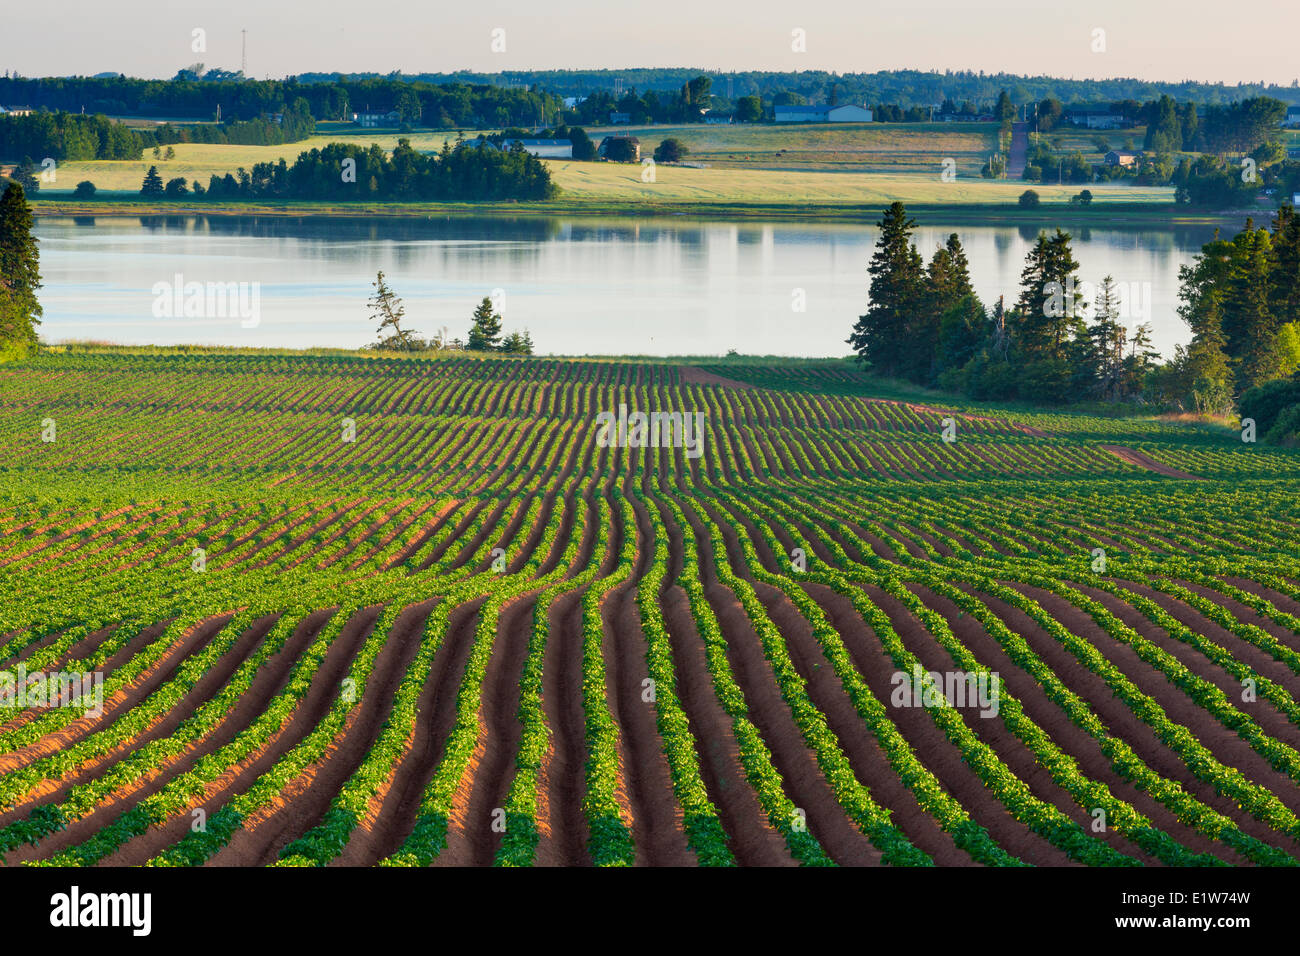 Potatoe field in spring, Fairview, Prince Edward Island, Canada Stock Photo